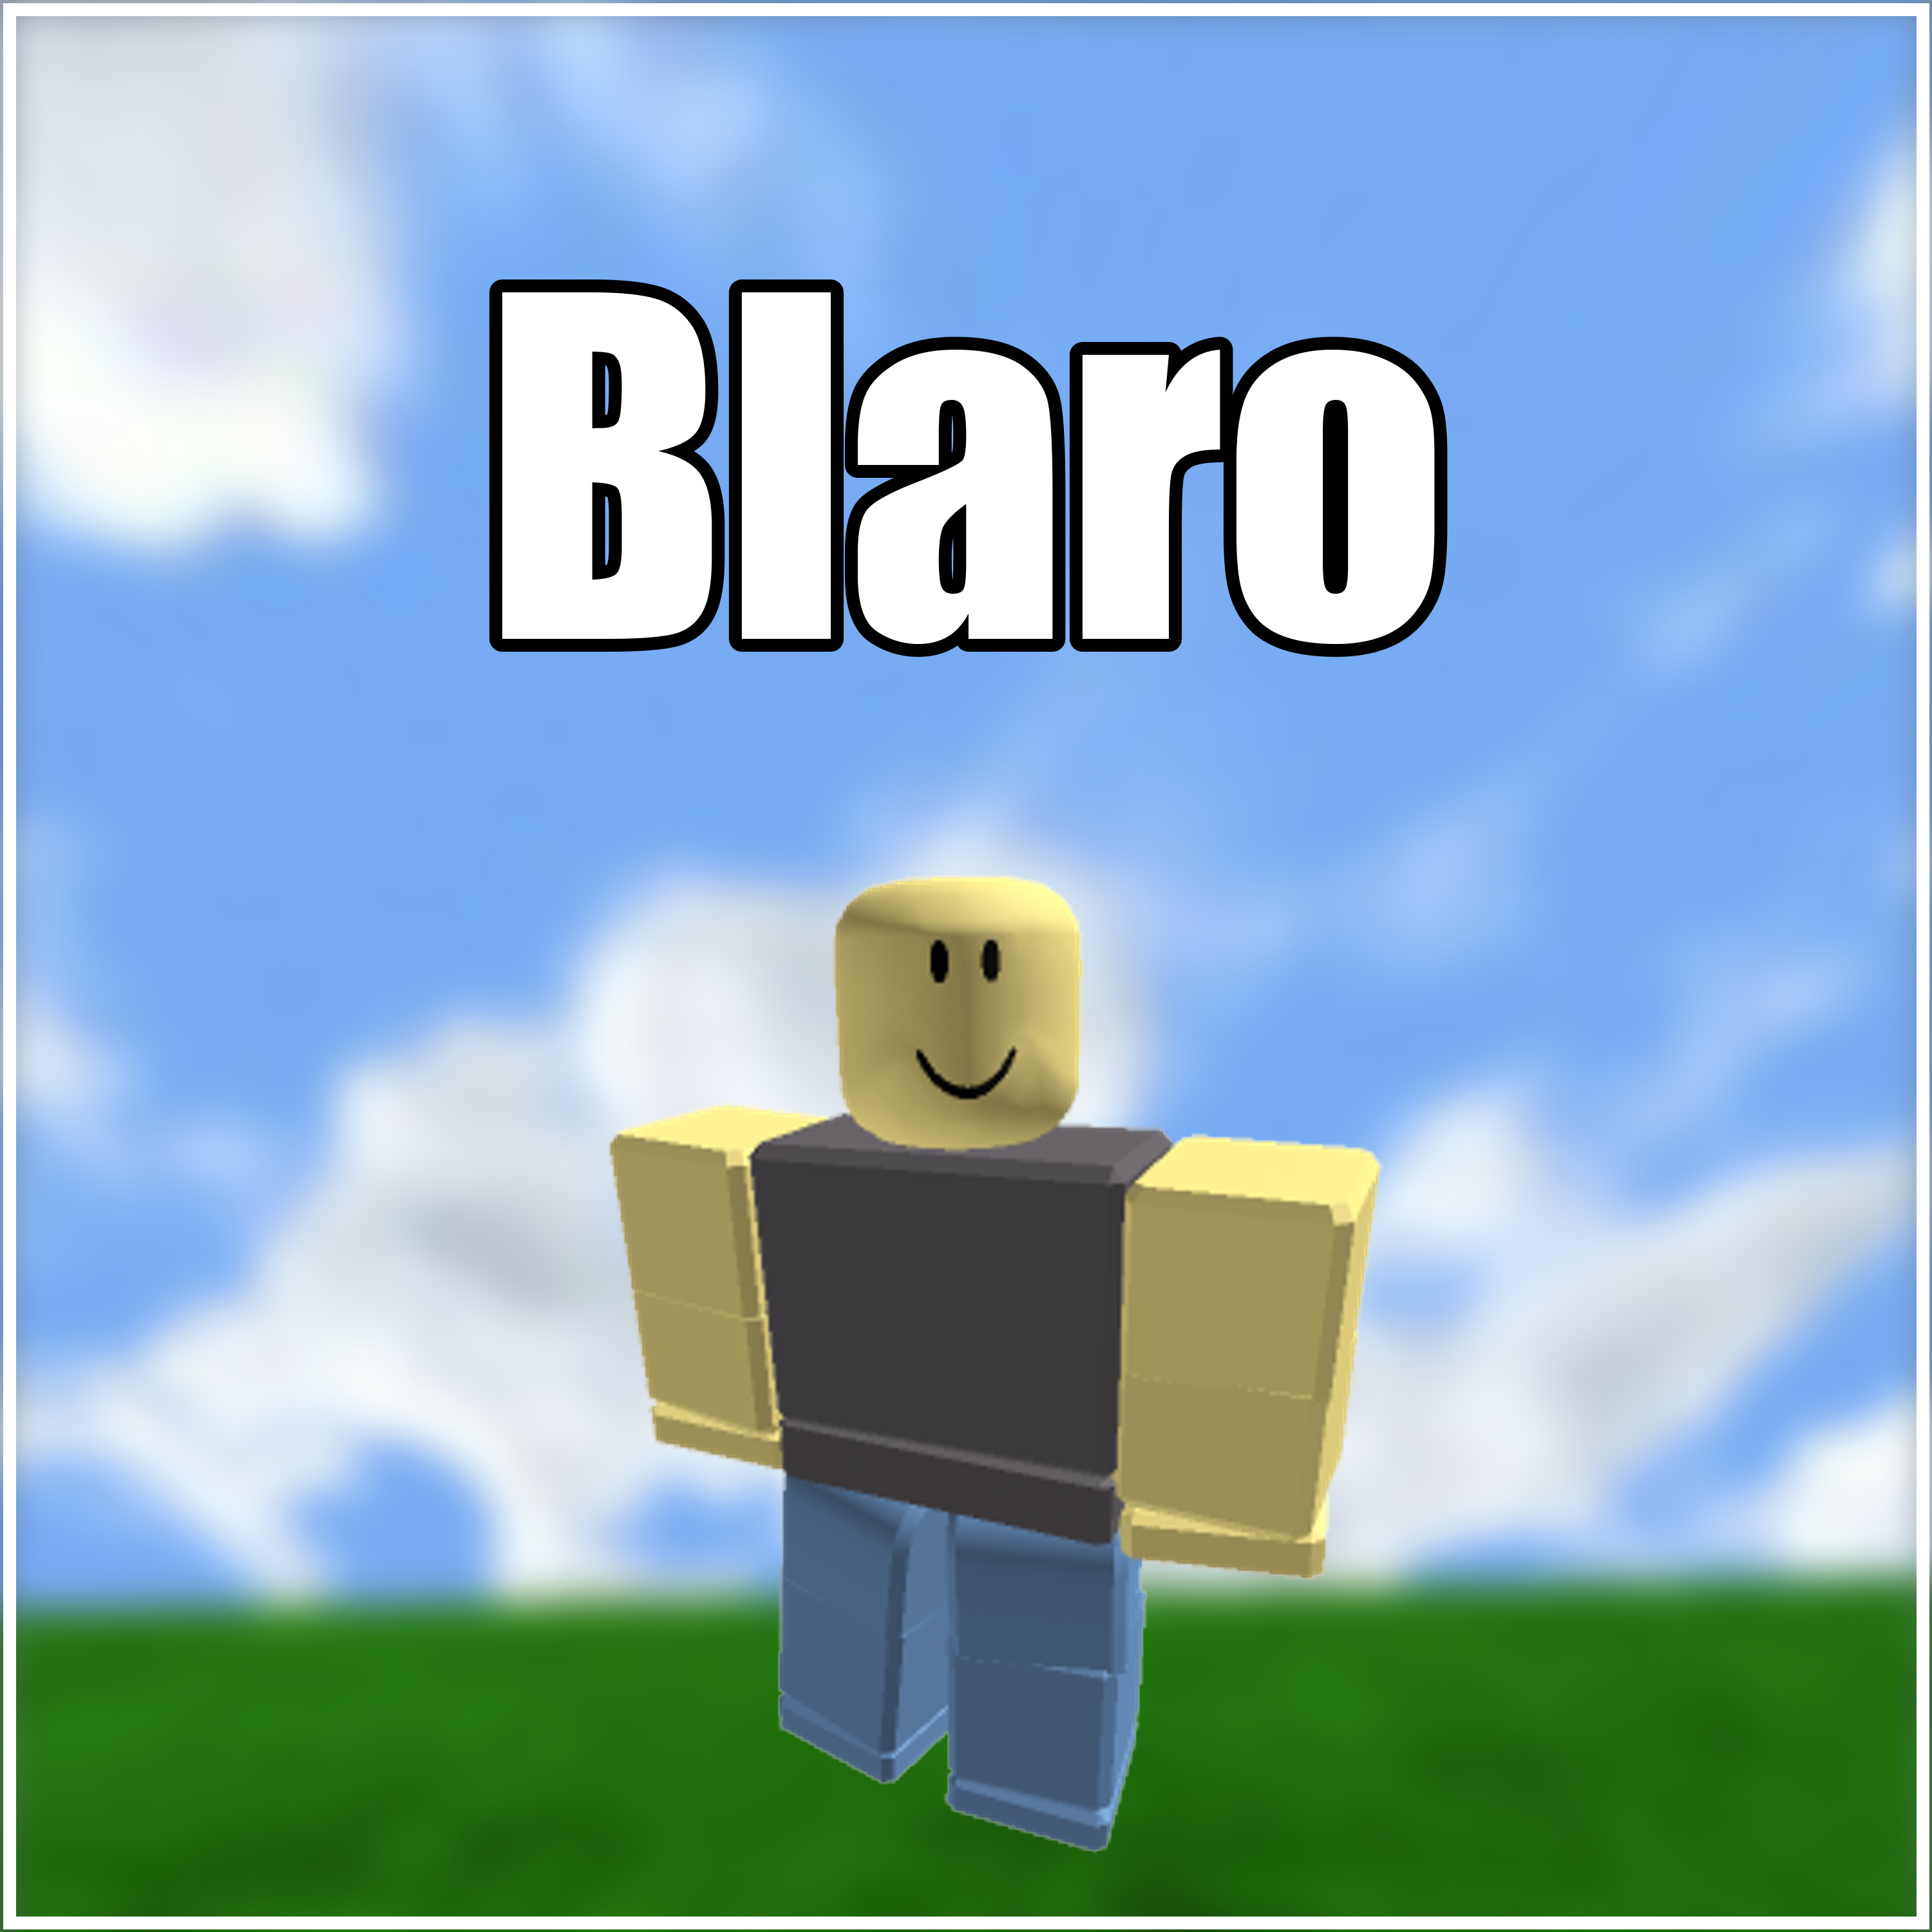 robruh RARE username "Blaro" ROBLOX account guaranteed to be unverified!